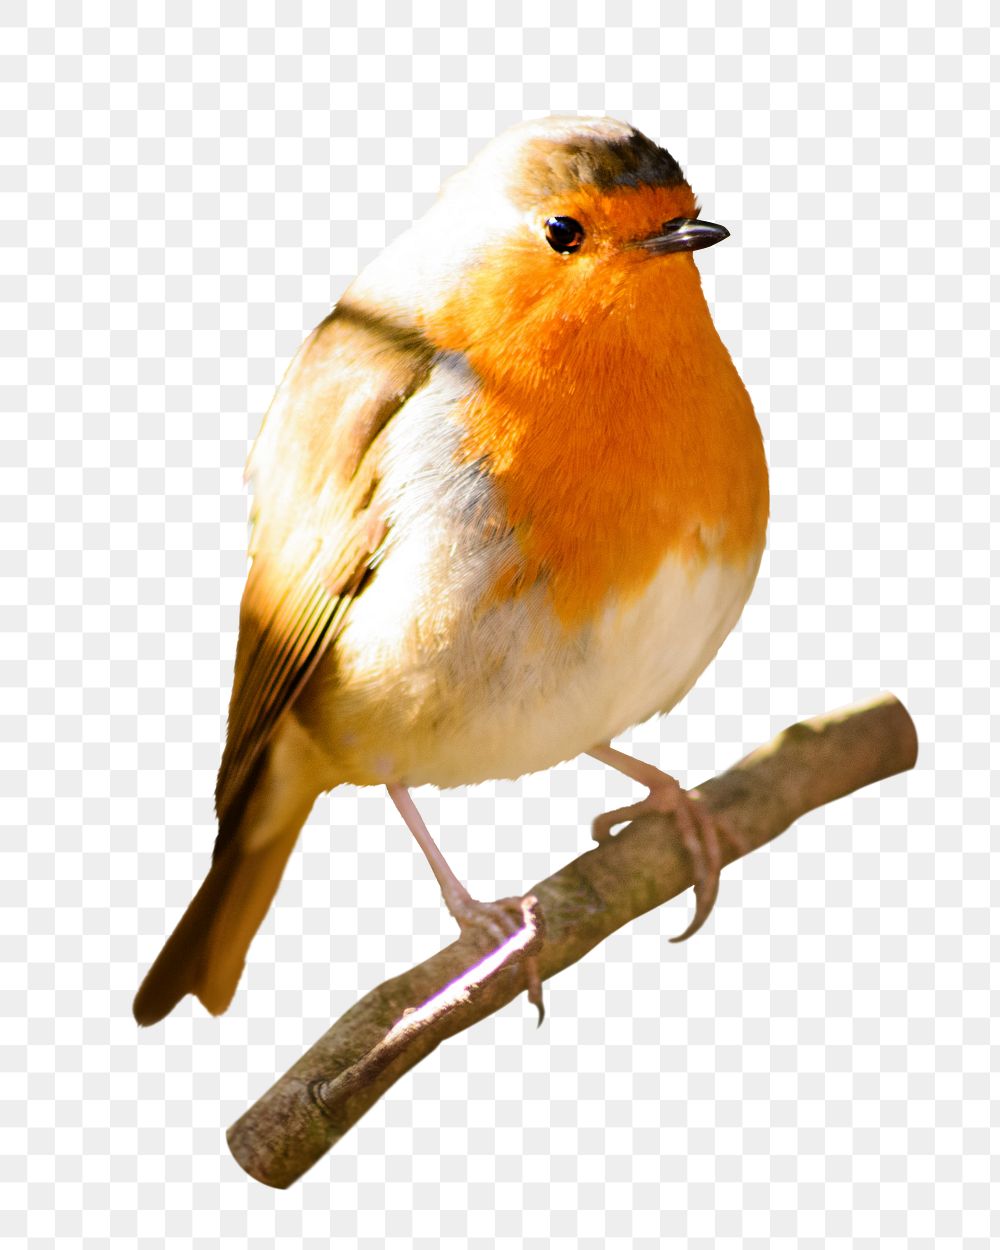 Robin bird png, transparent background